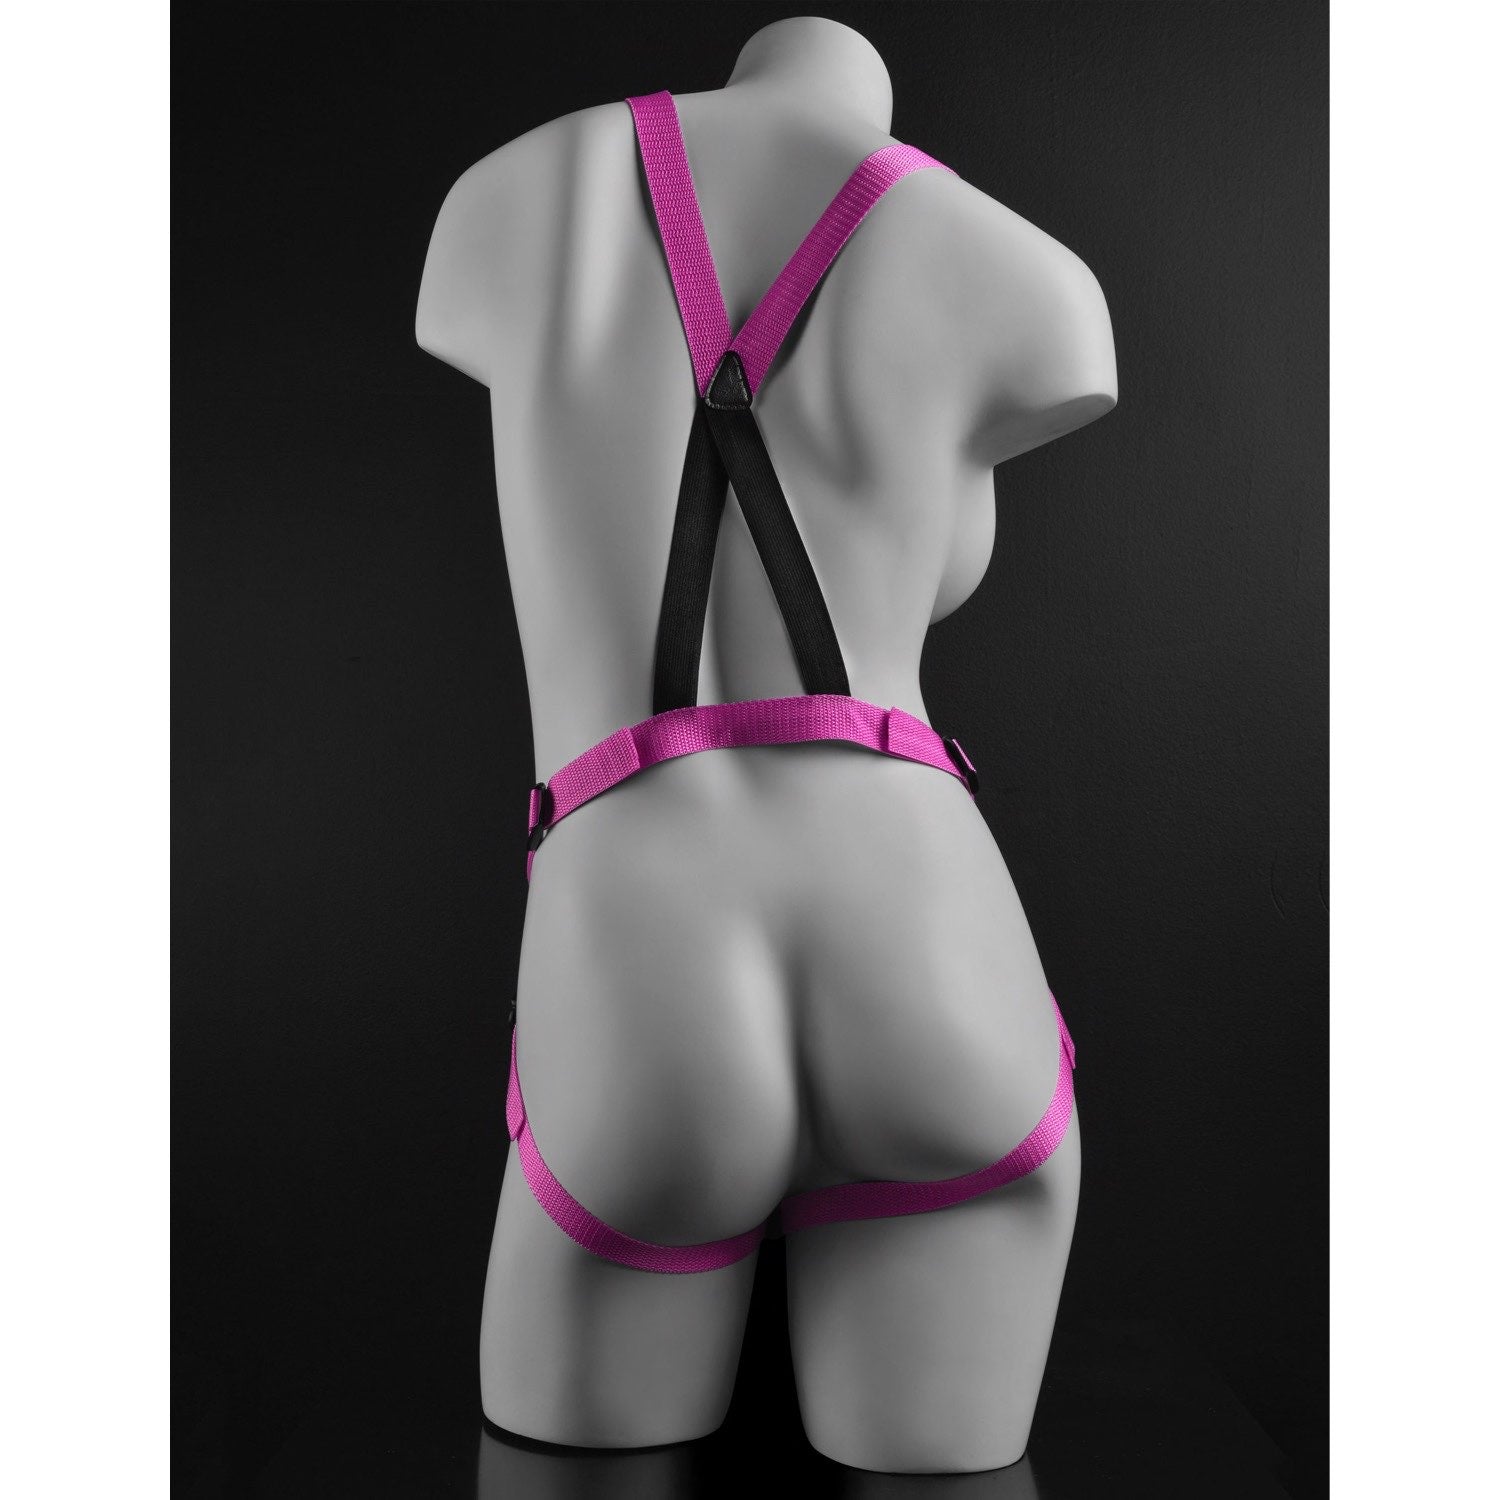 Dillio 7&quot; Strap-On Suspender Harness Set - Pink 17.8 cm Strap-On with Suspender Harness by Pipedream